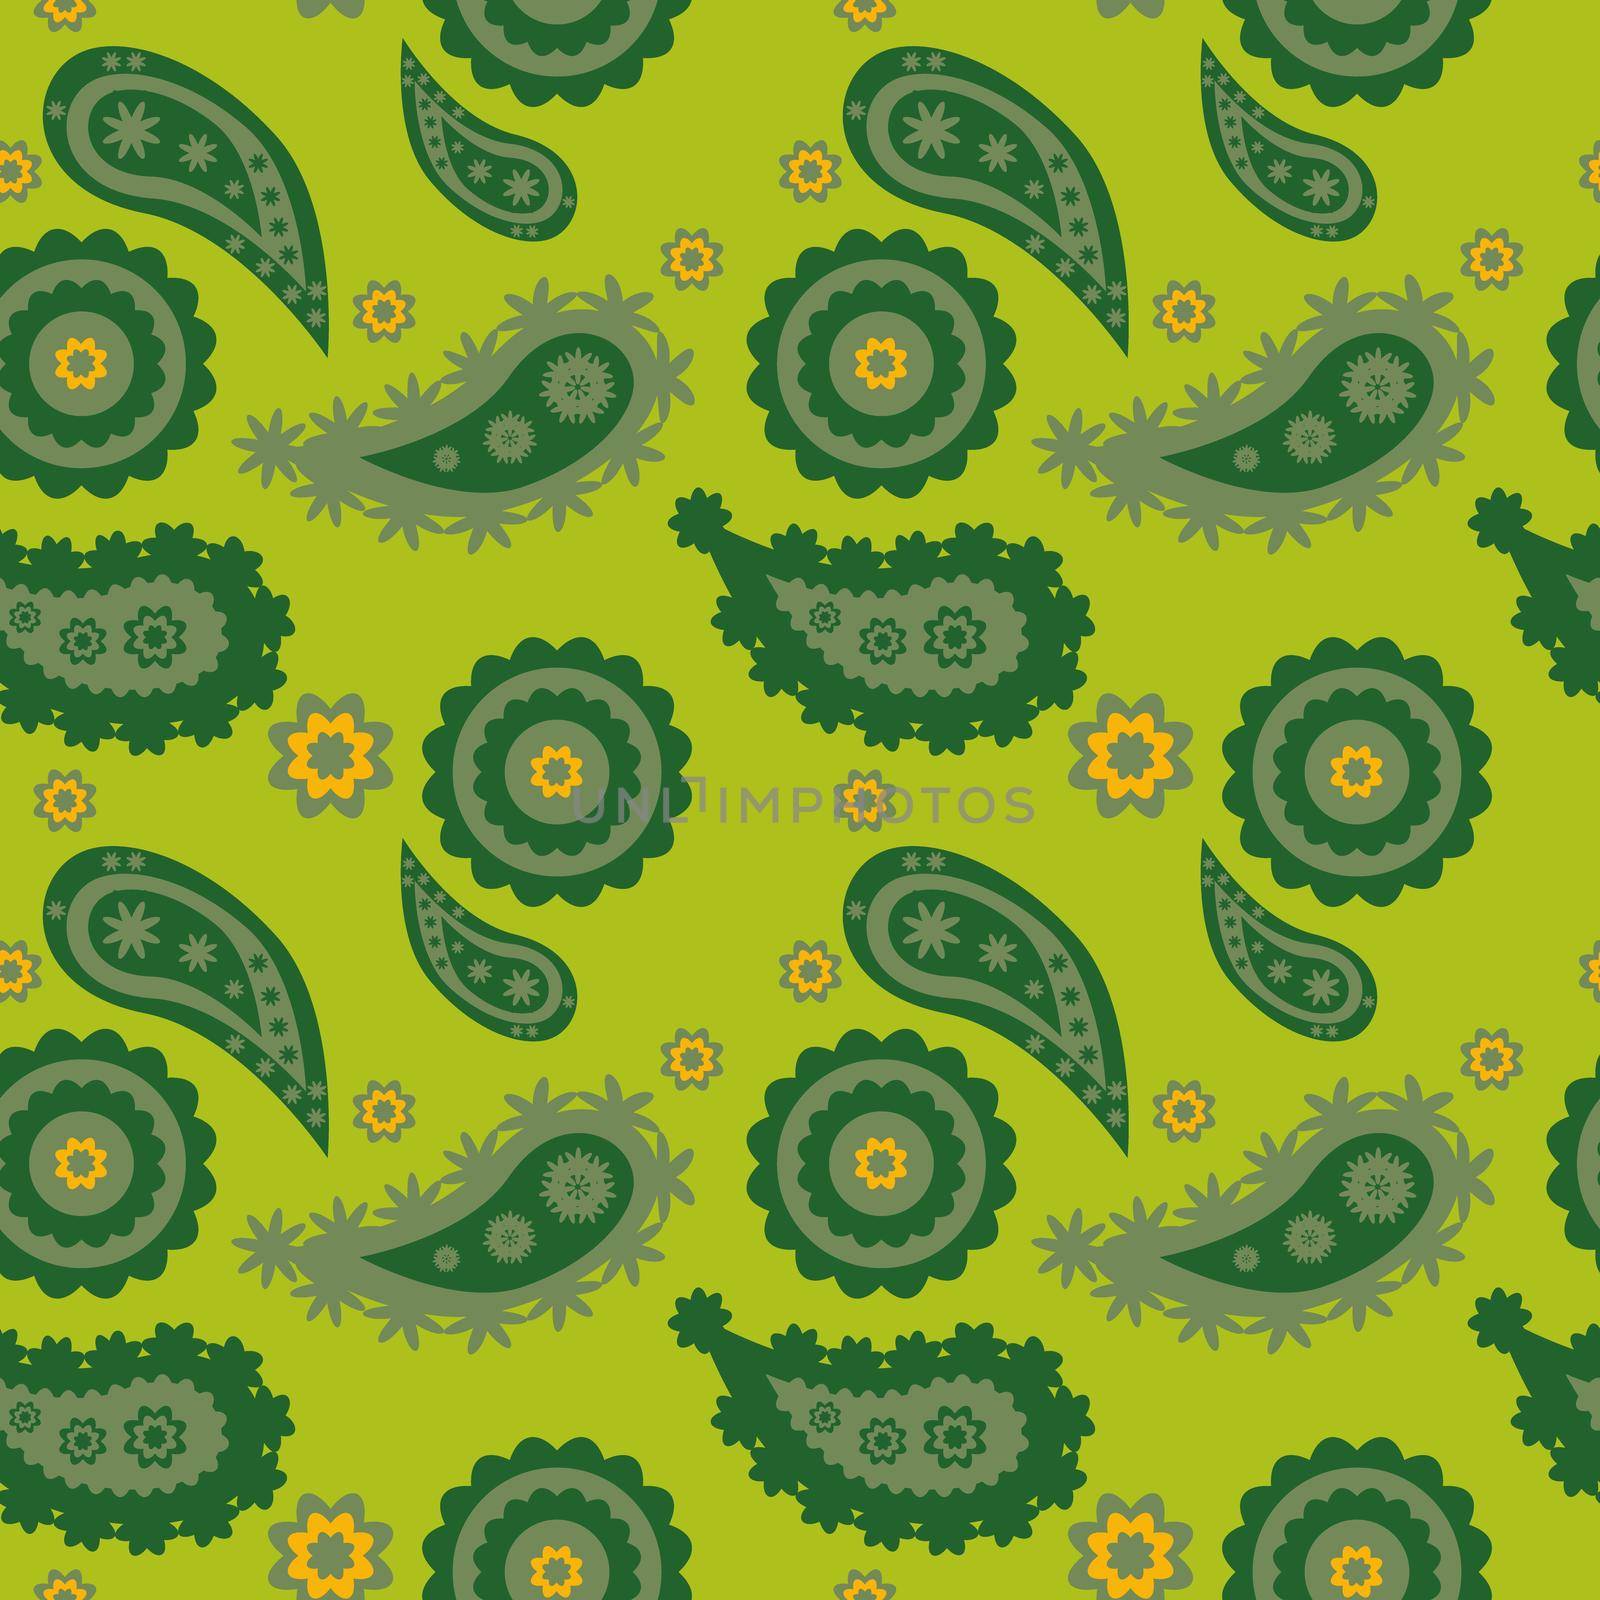 Paisley pattern. Doodle  background. Henna paisley mehndi doodles design tribal design element